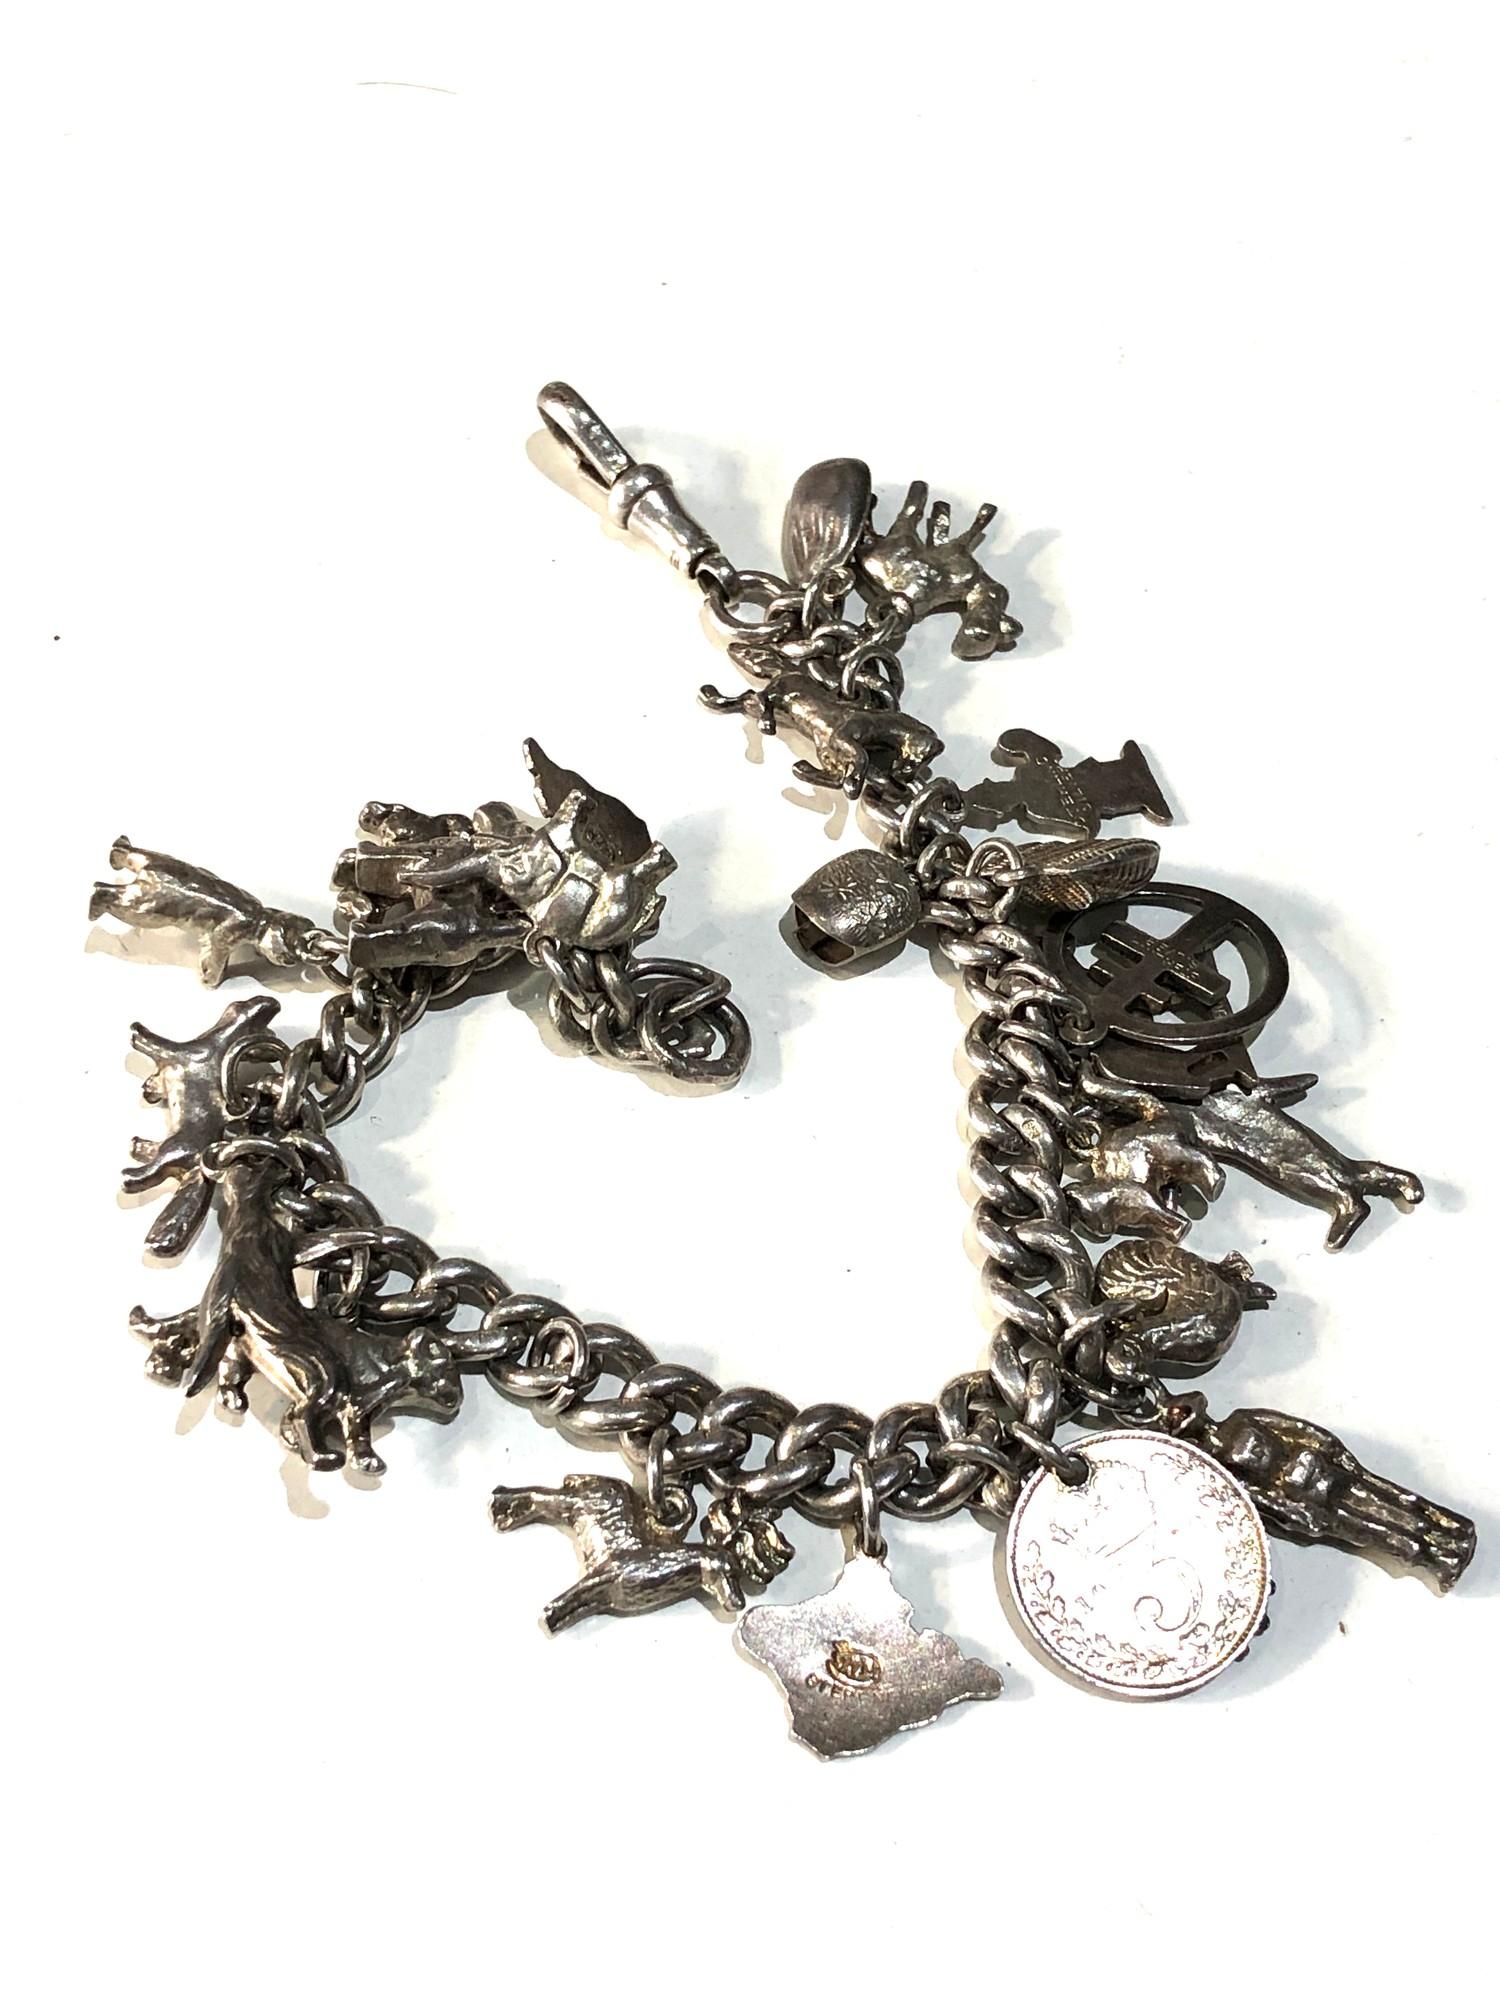 Vintage silver charm bracelet weight 57g